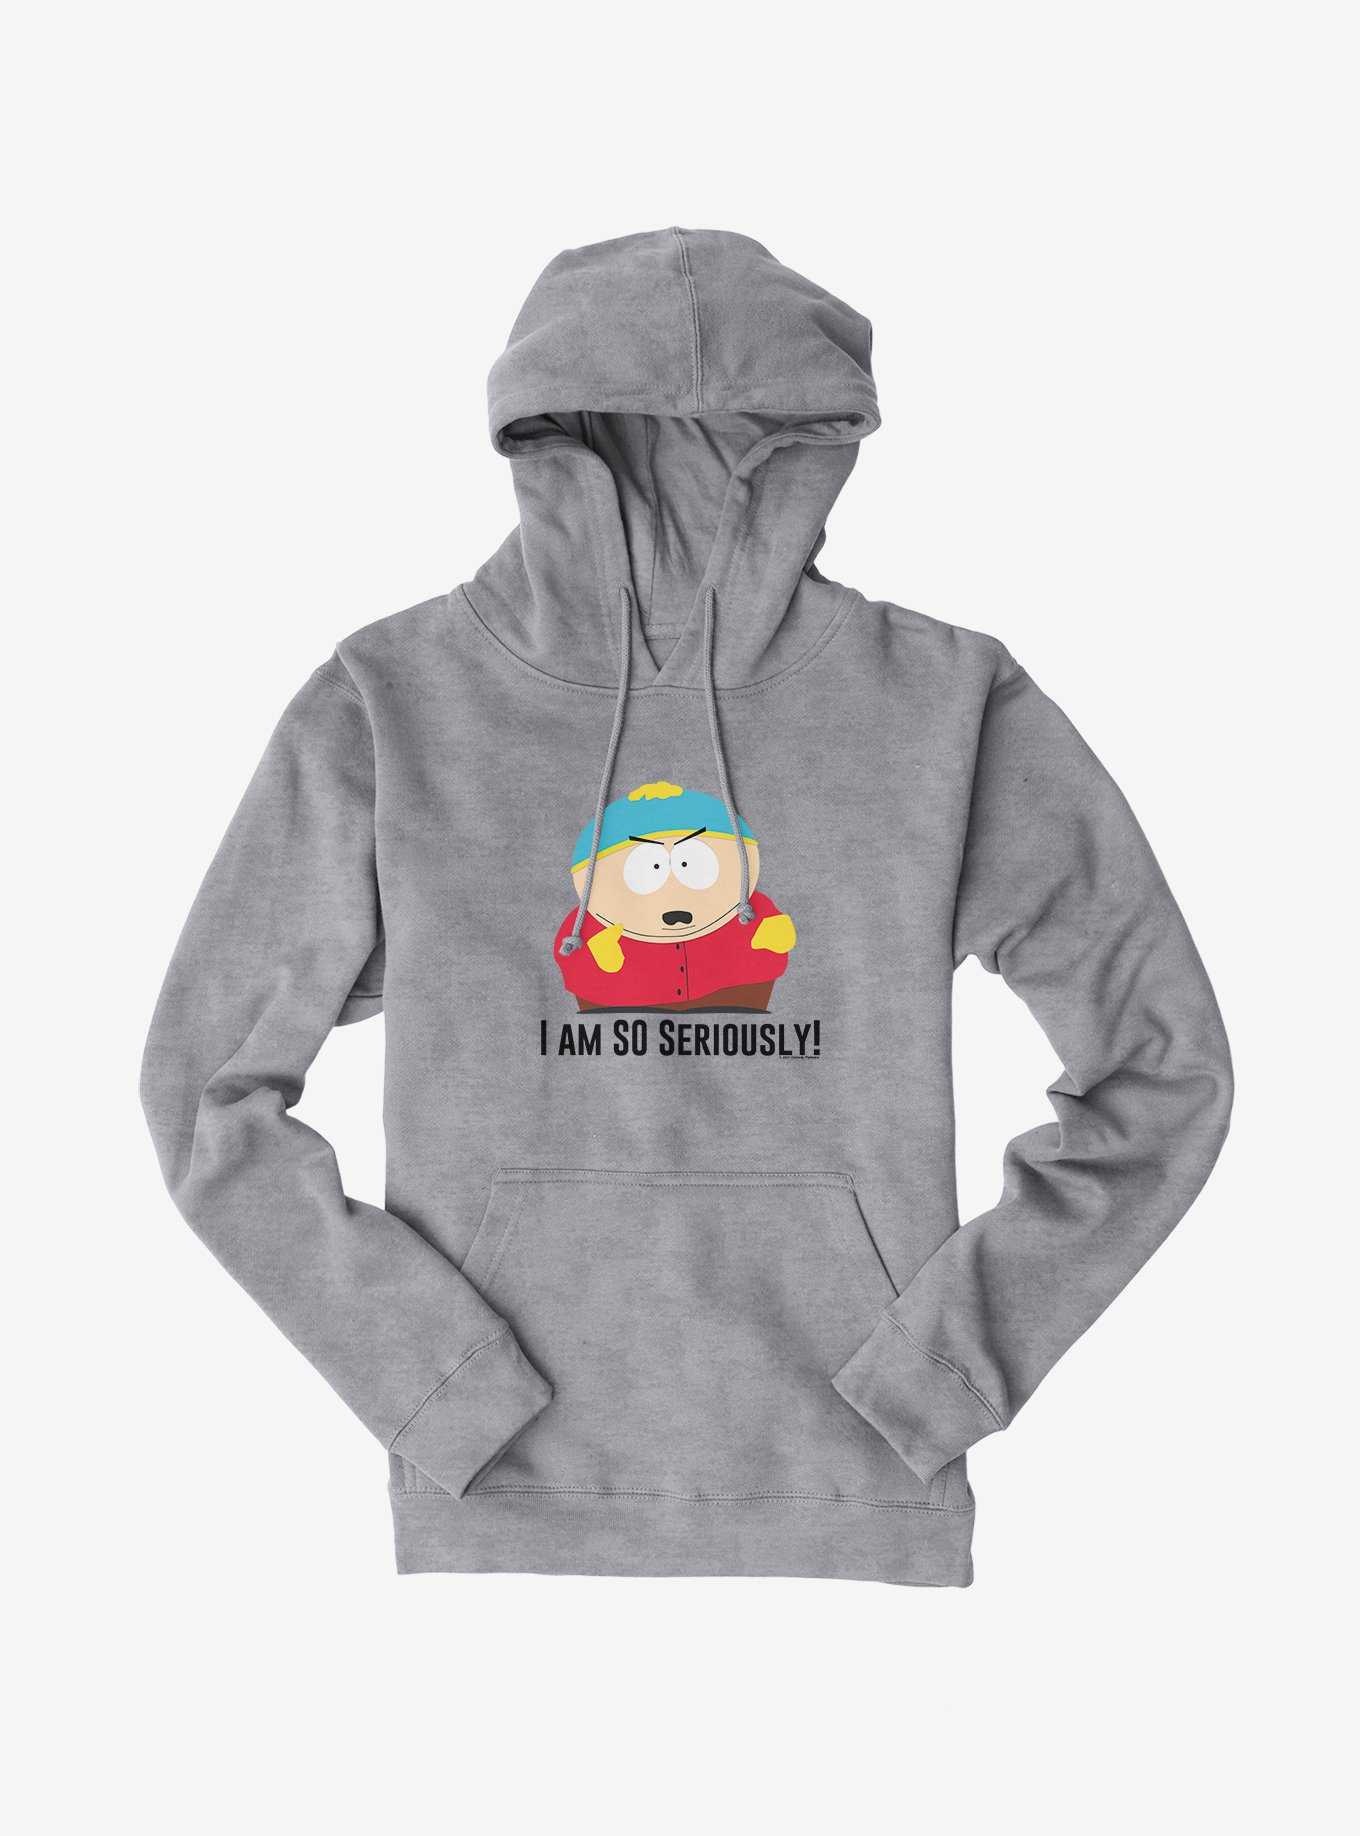 South Park Season Reference Cartman Seriously Hoodie, , hi-res